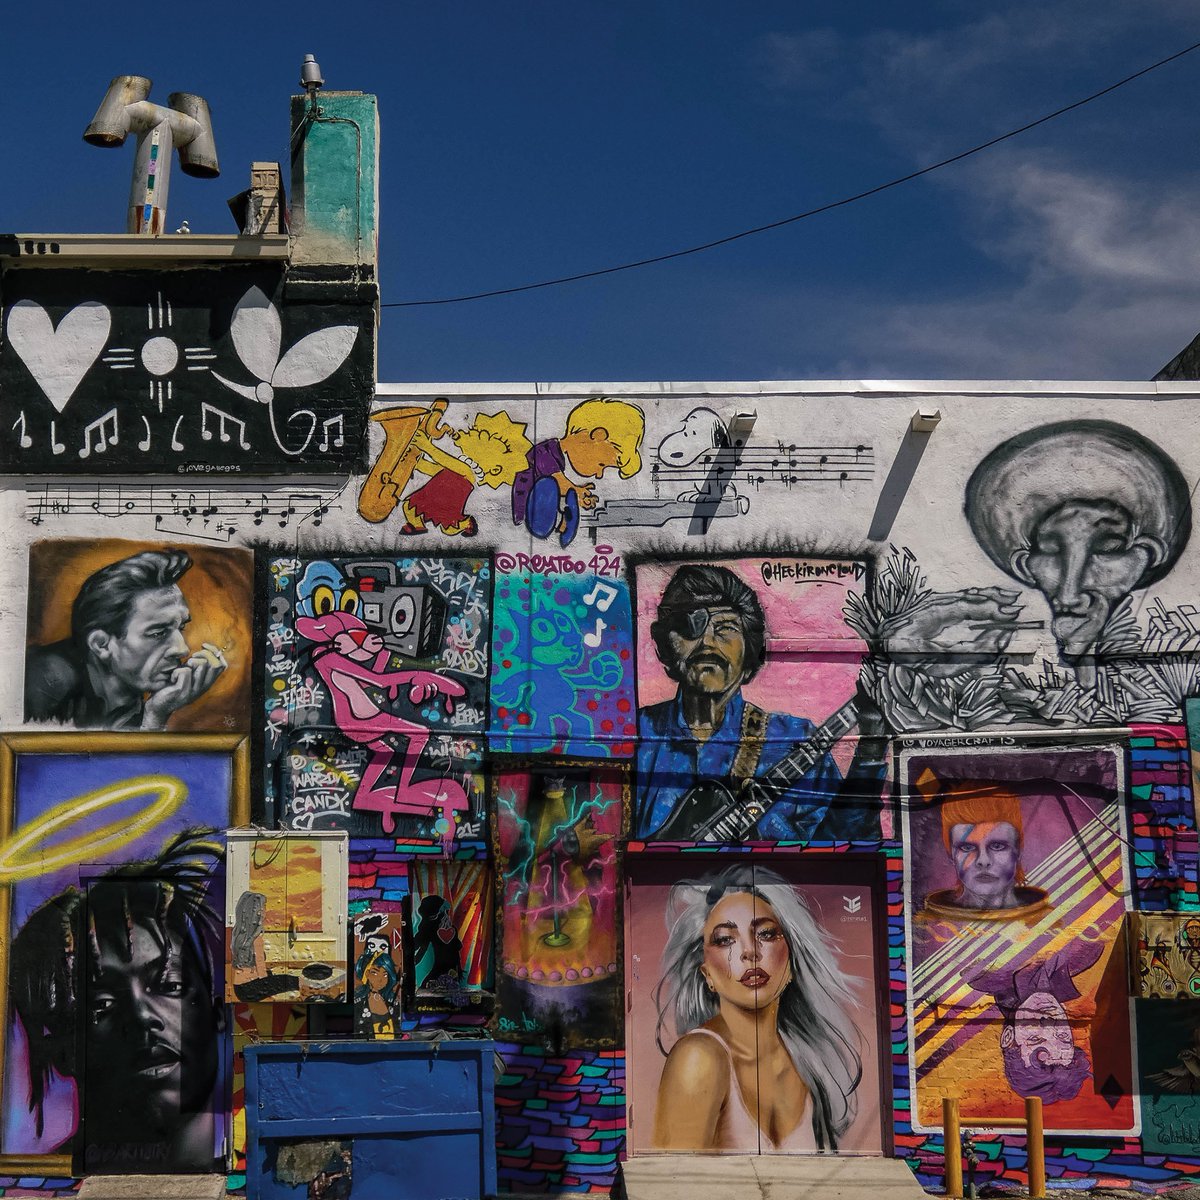 #Albuquerque Alley #Art

#inspiredbyart #artofvisuals #murals #streetart #NewMexico